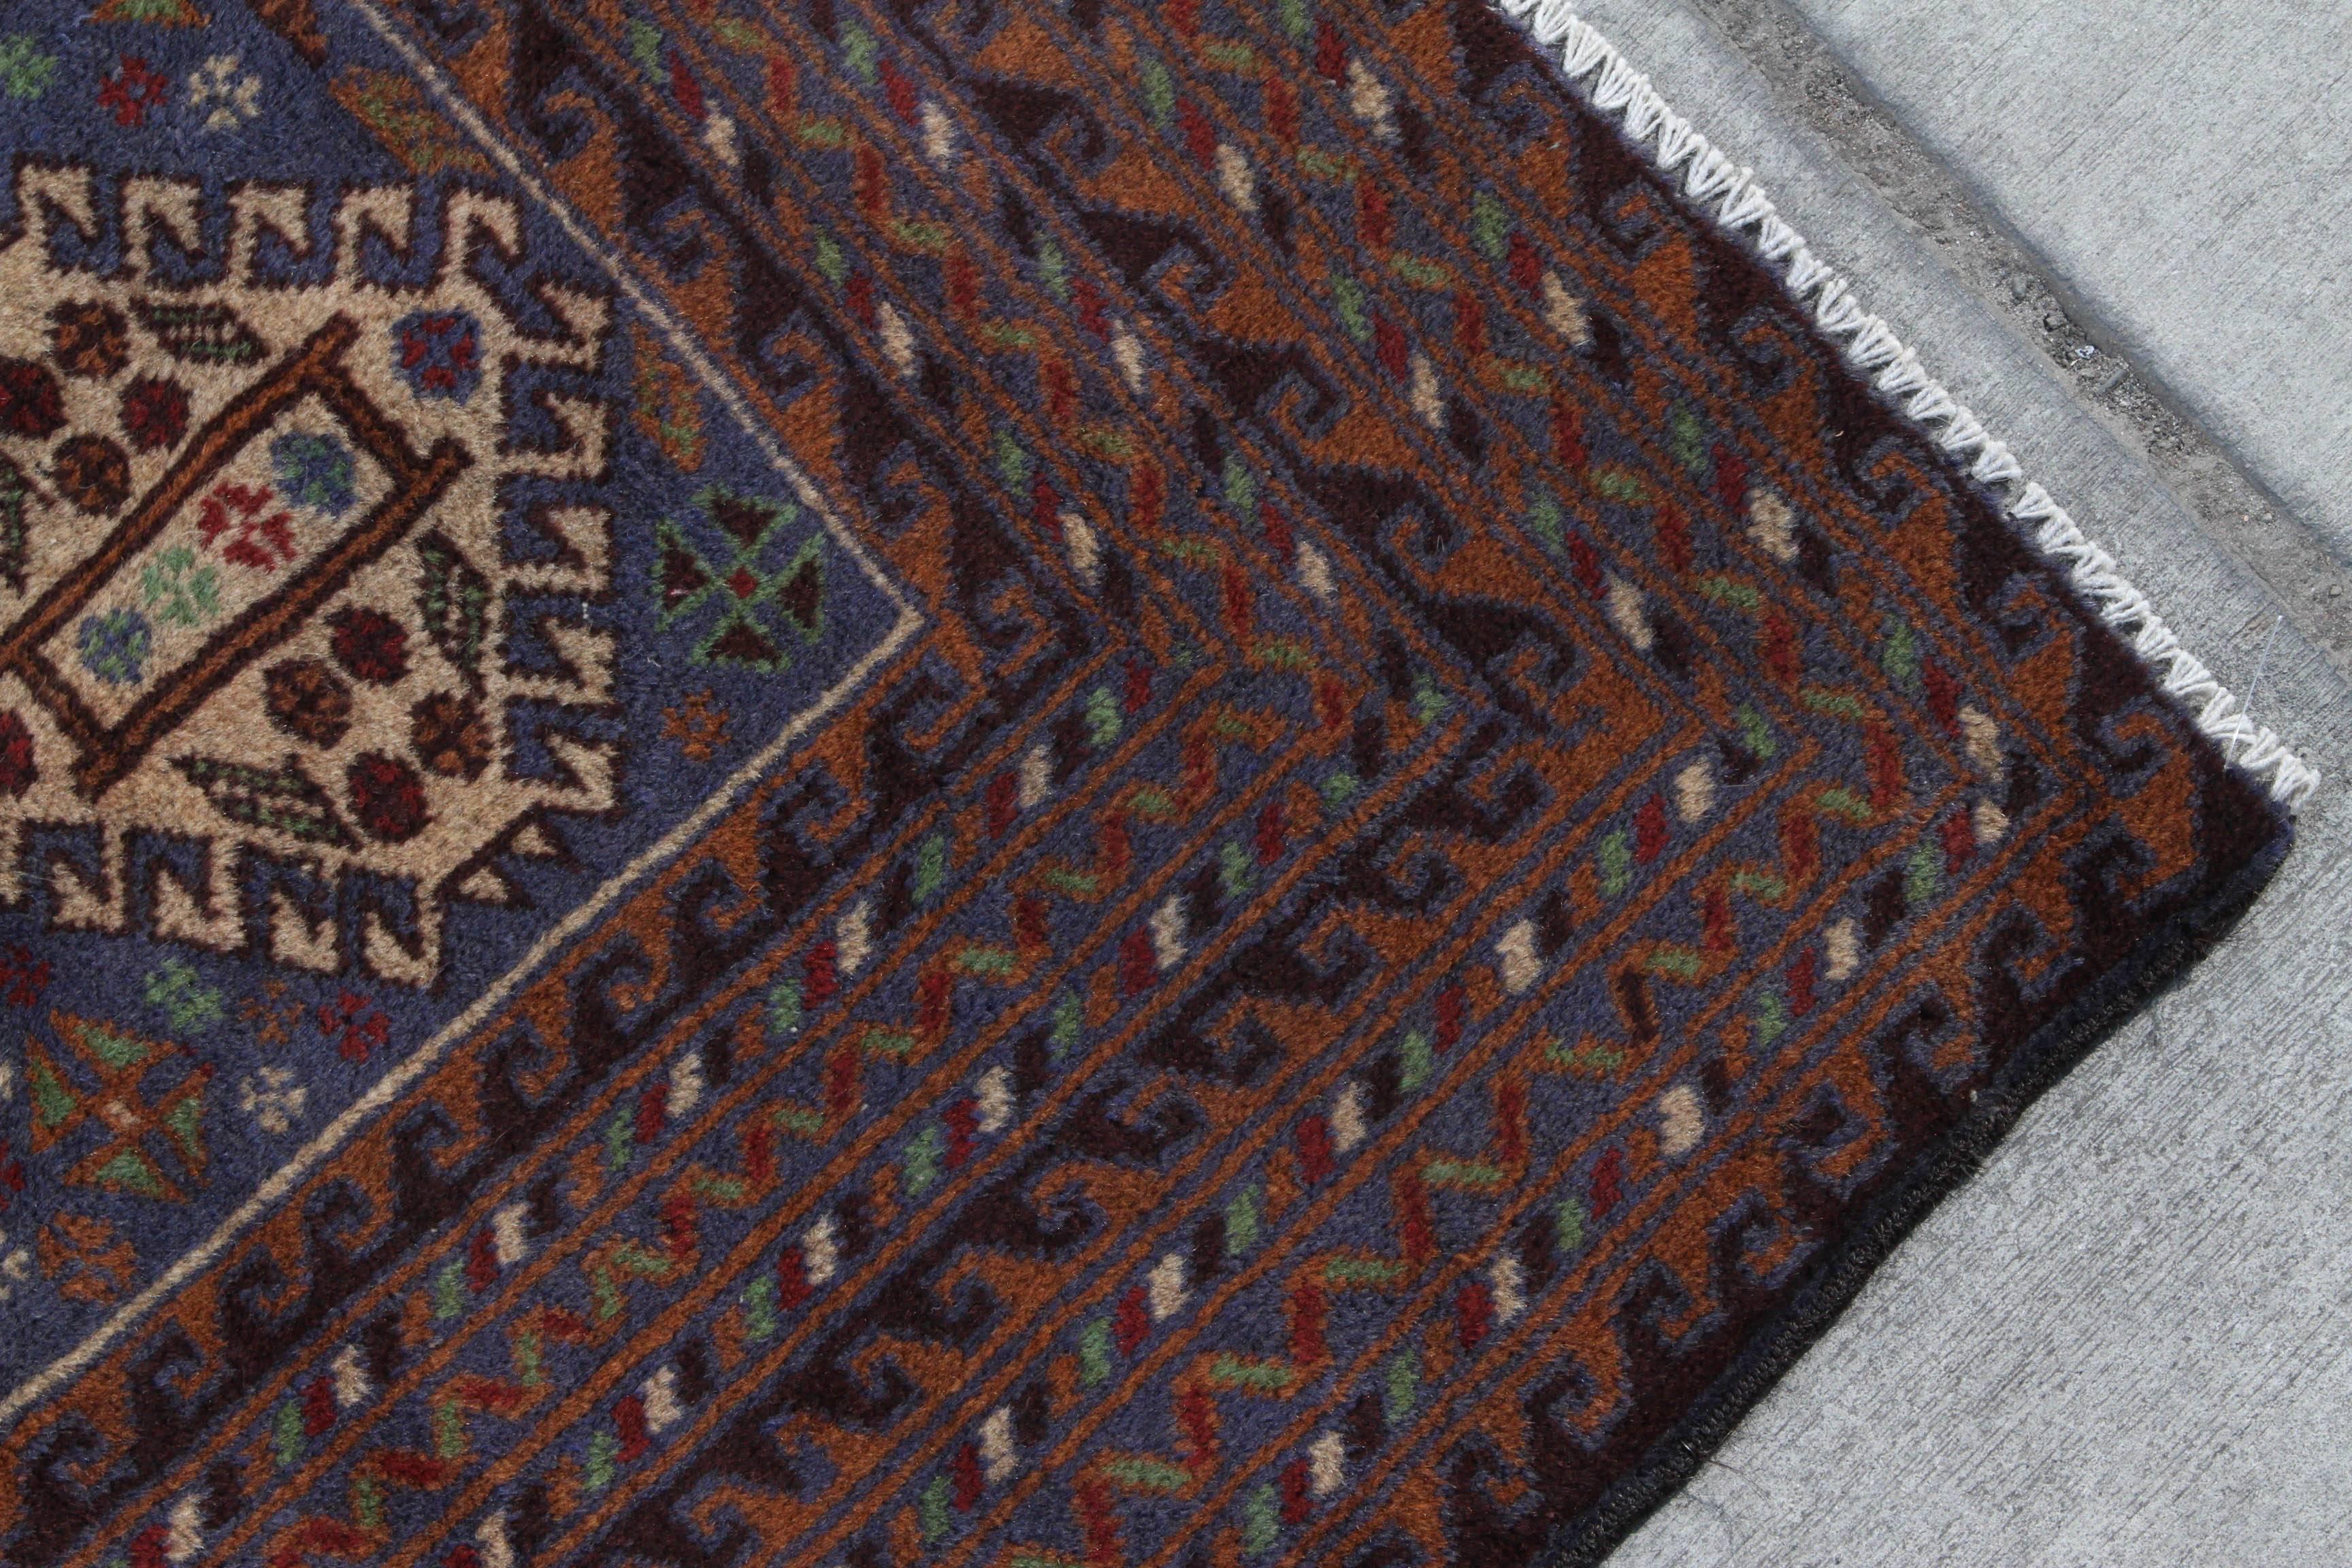 Iraqi Multicolored Antique Persian Baluchi Rug For Sale